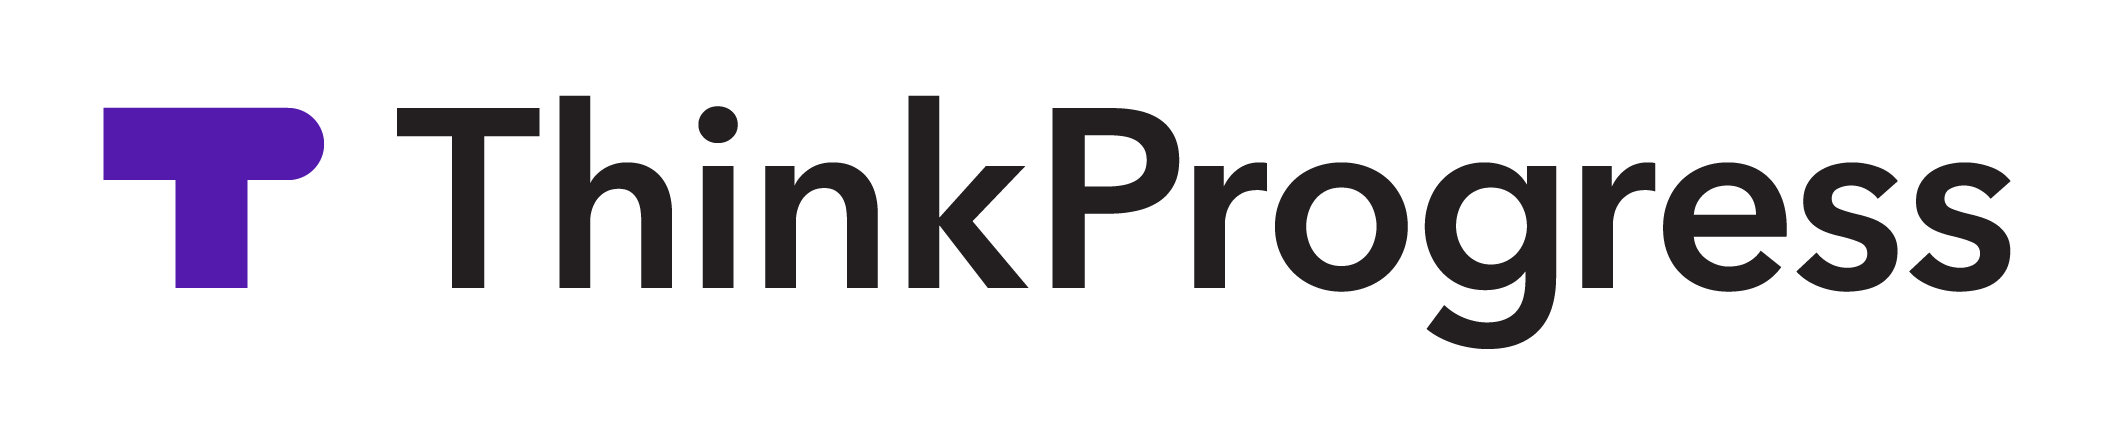 ThinkProgress_Inline_Logotype